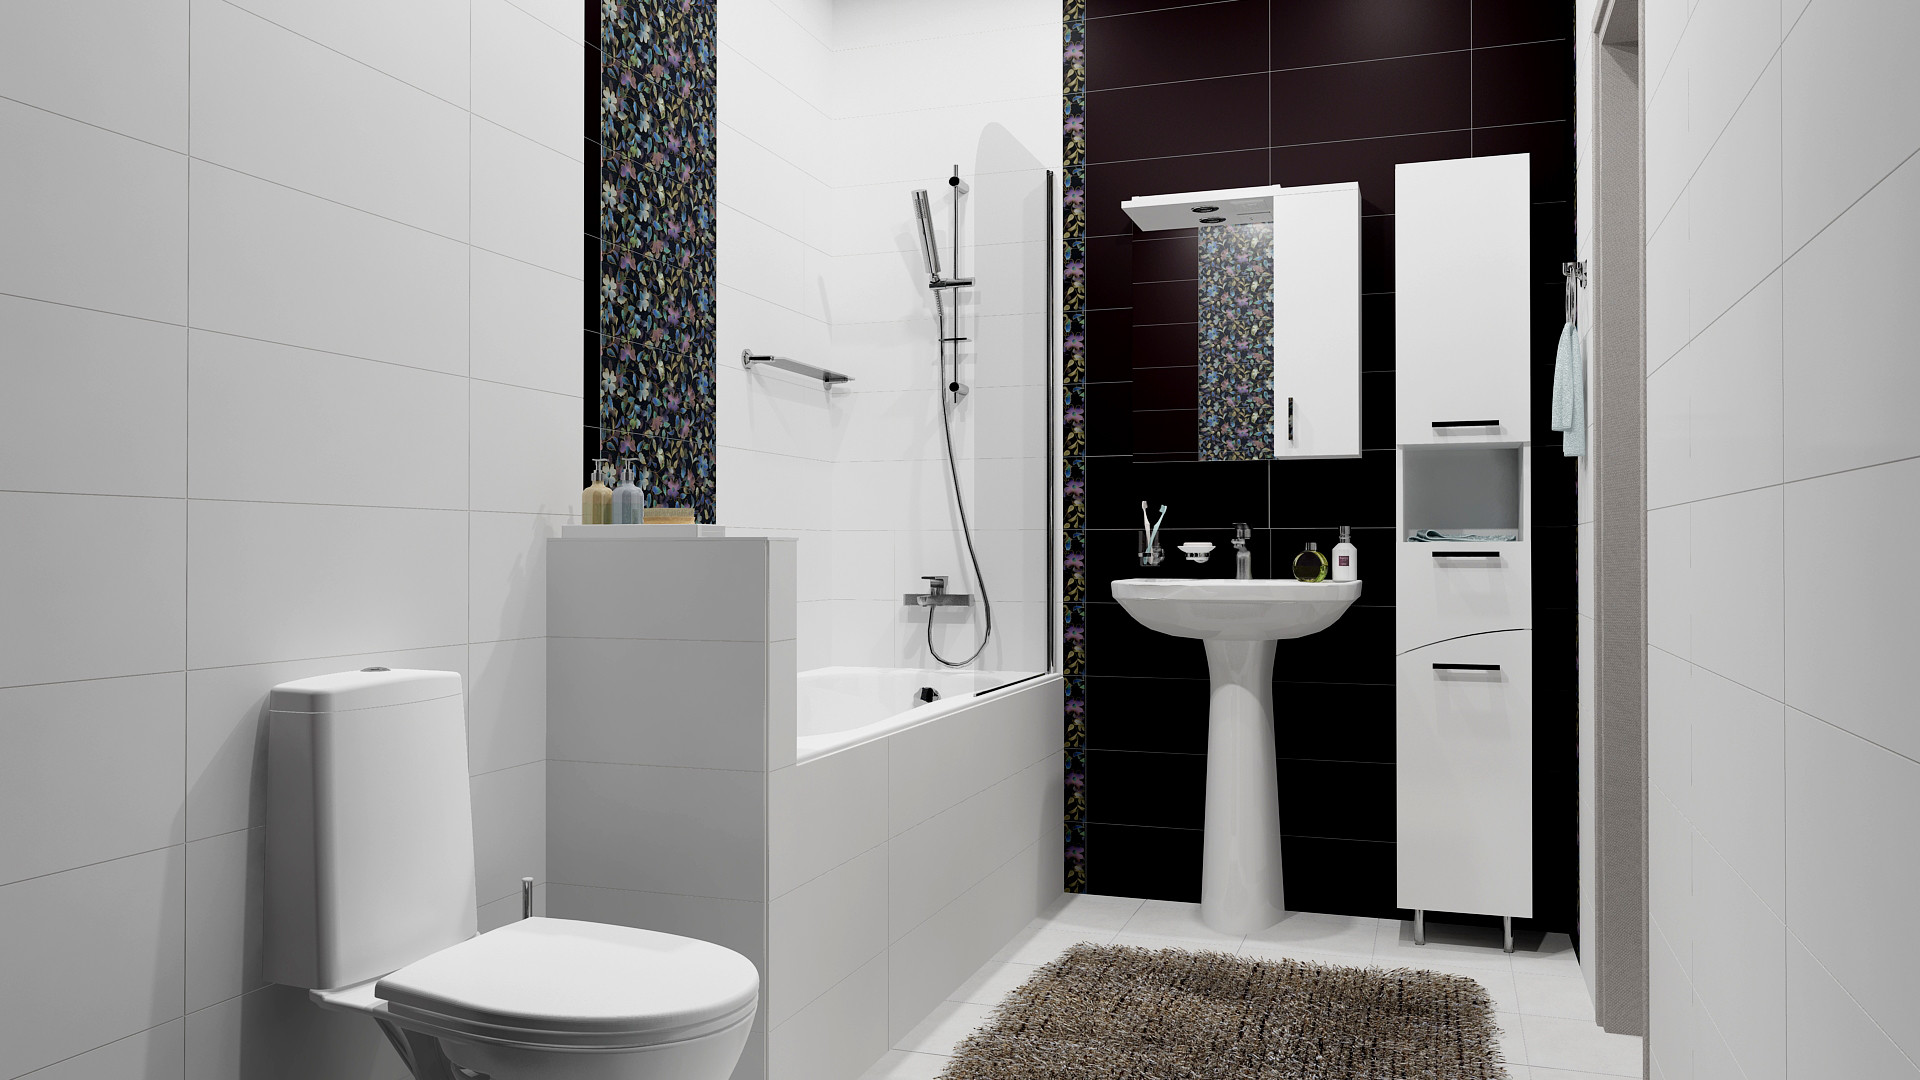 черно белая ванная комната дизайн плитка